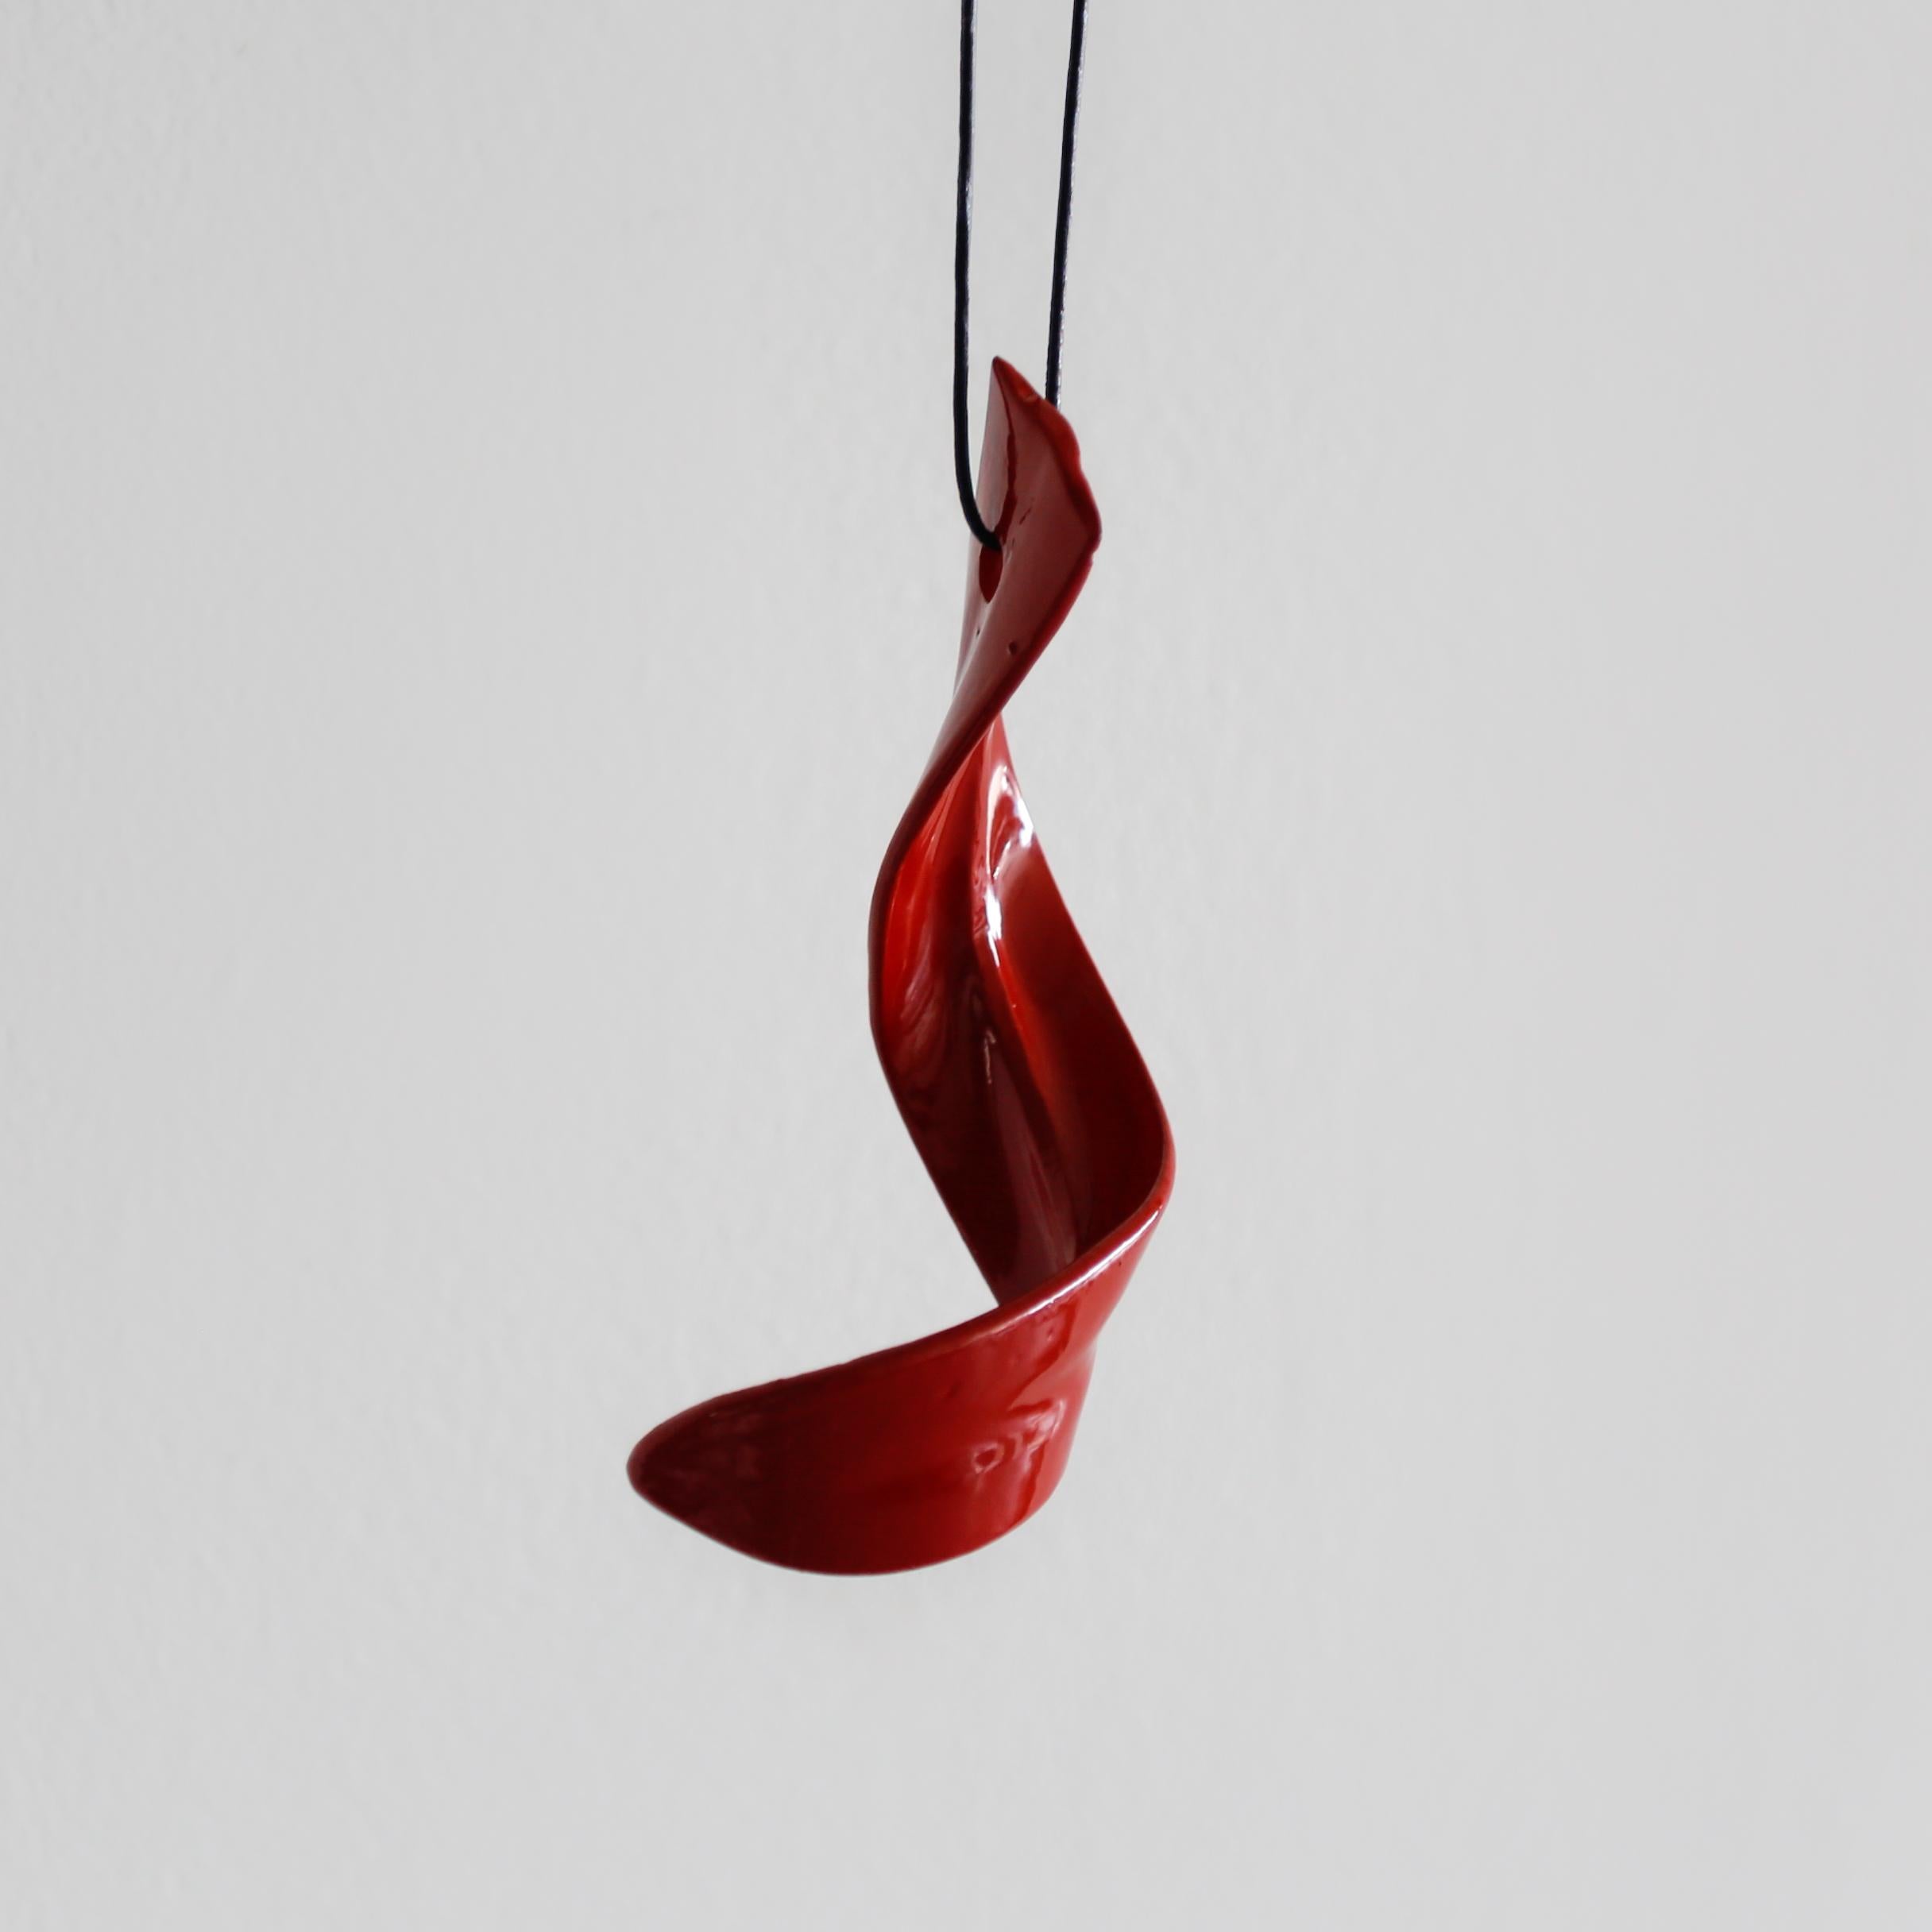 Red Ribbon 4 - Sculpture by Morgan Robinson